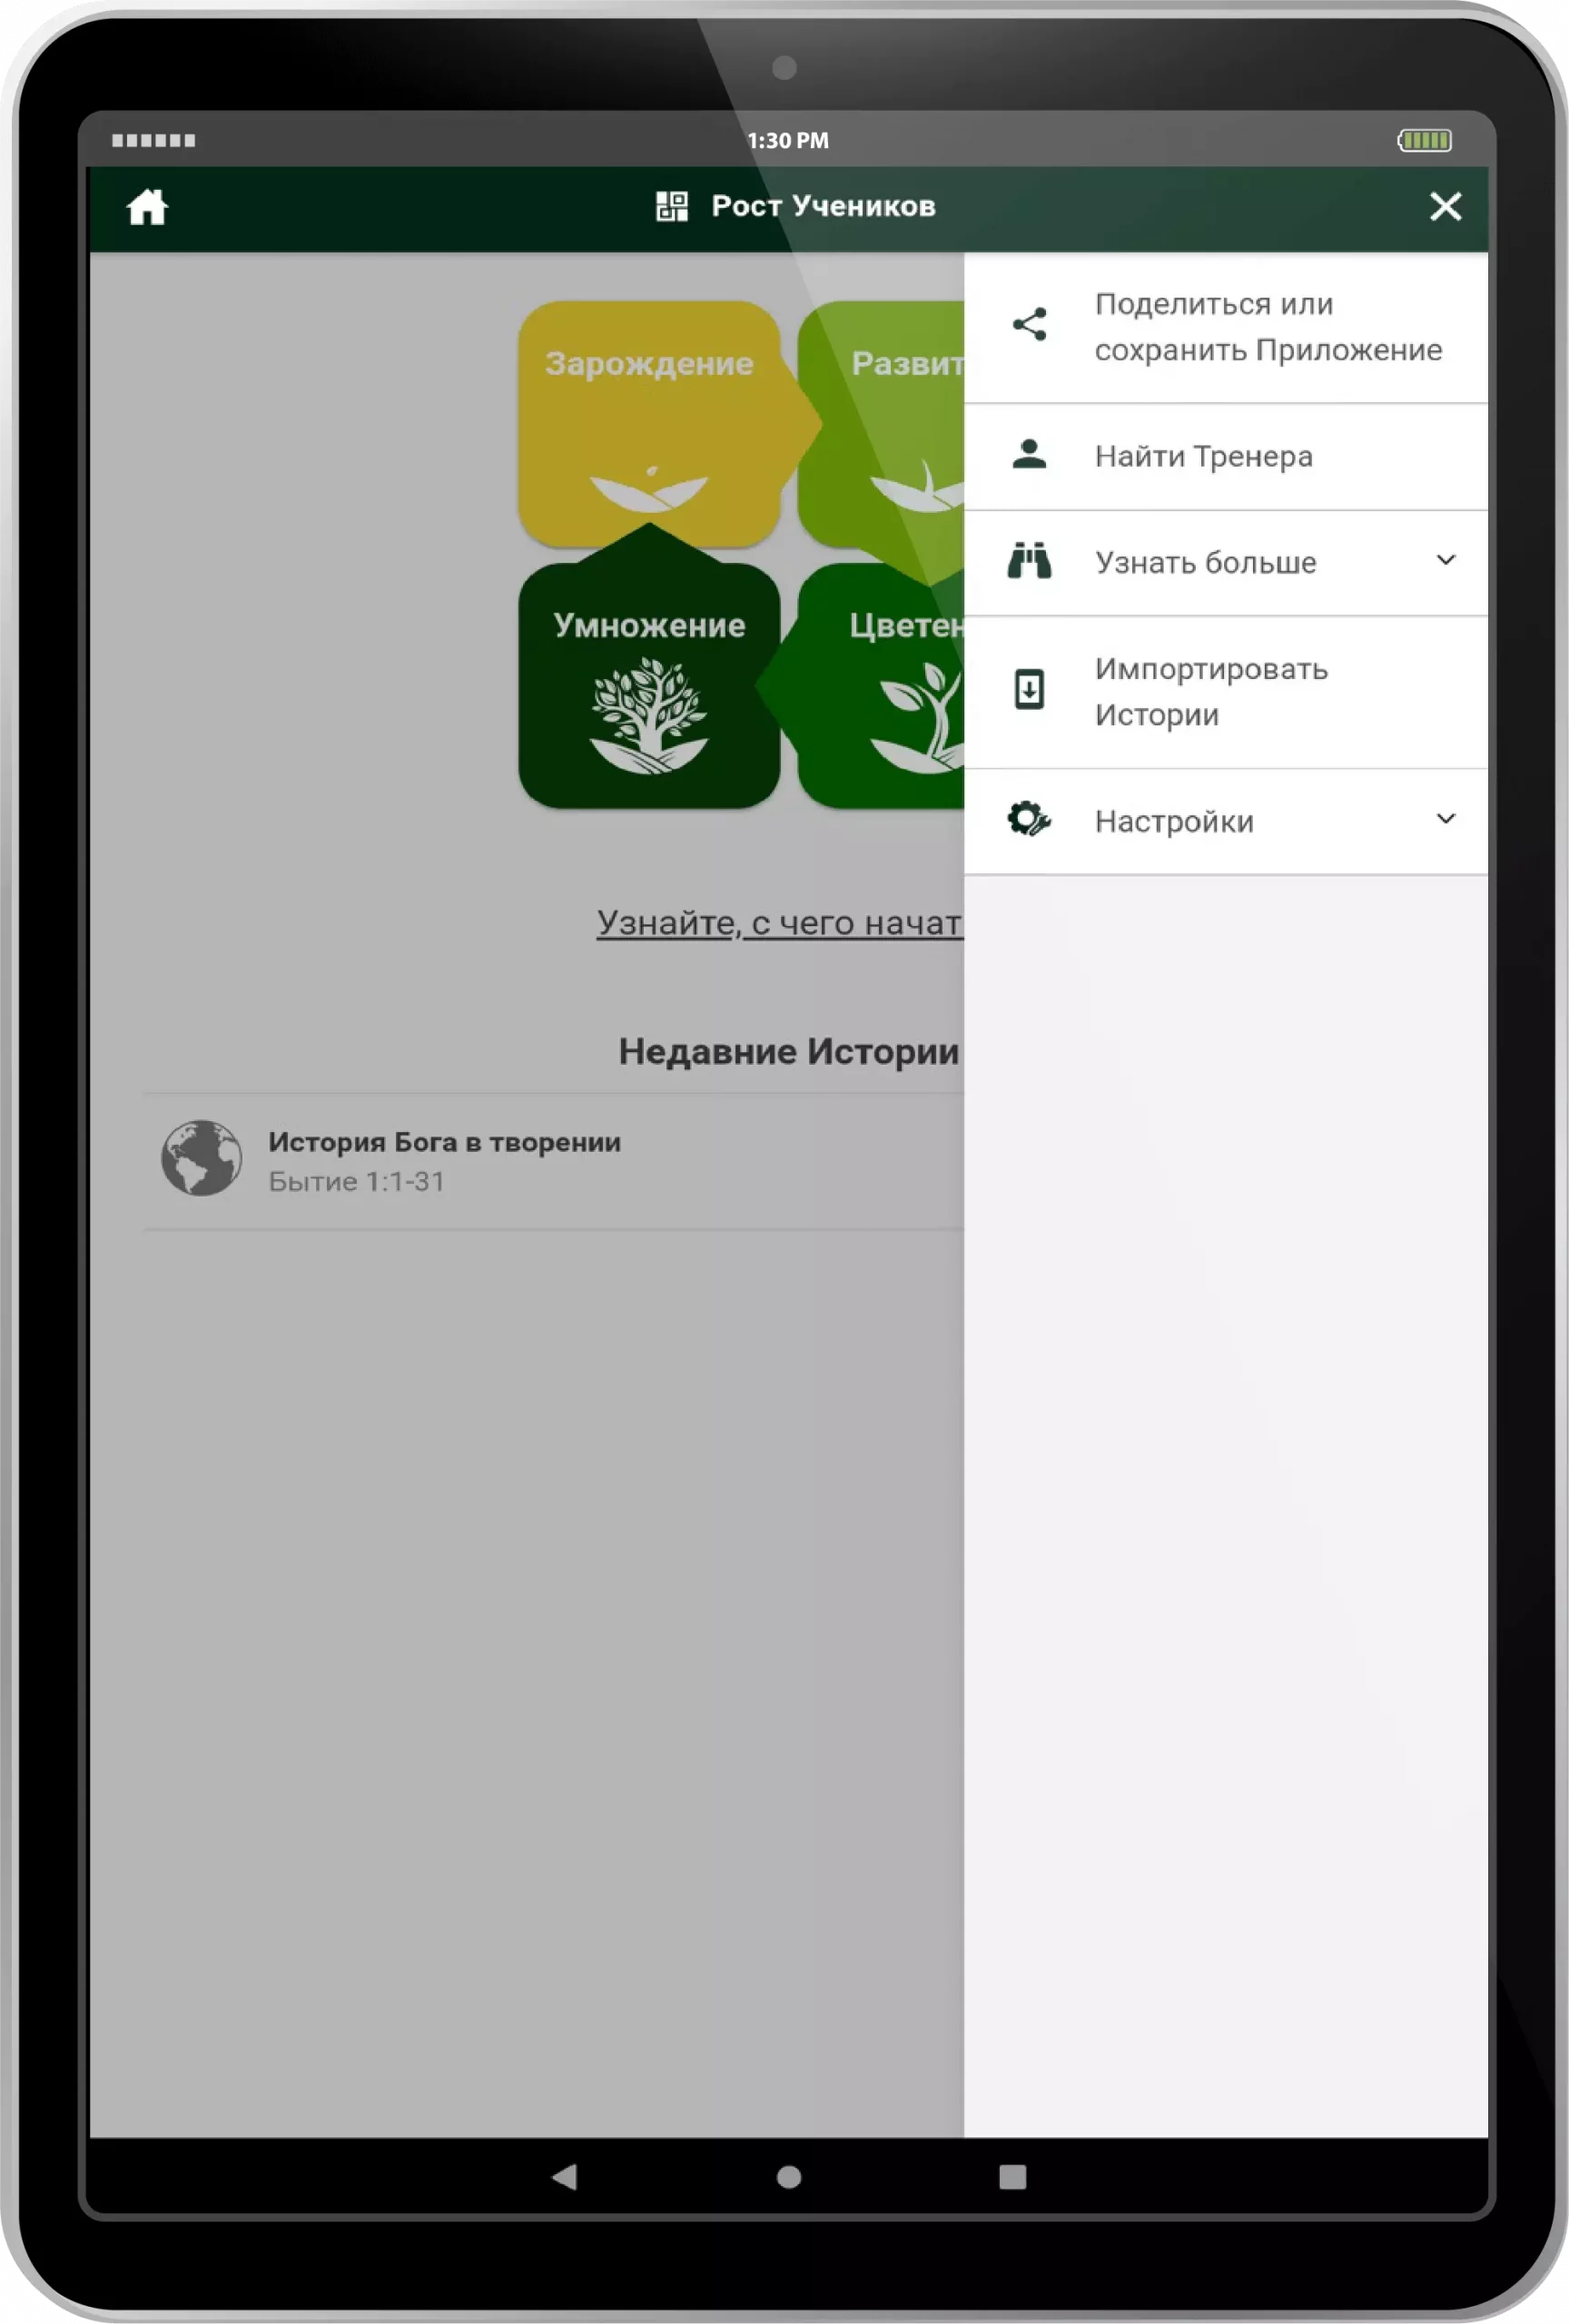 Screenshot of the pattern platform application on a tablet